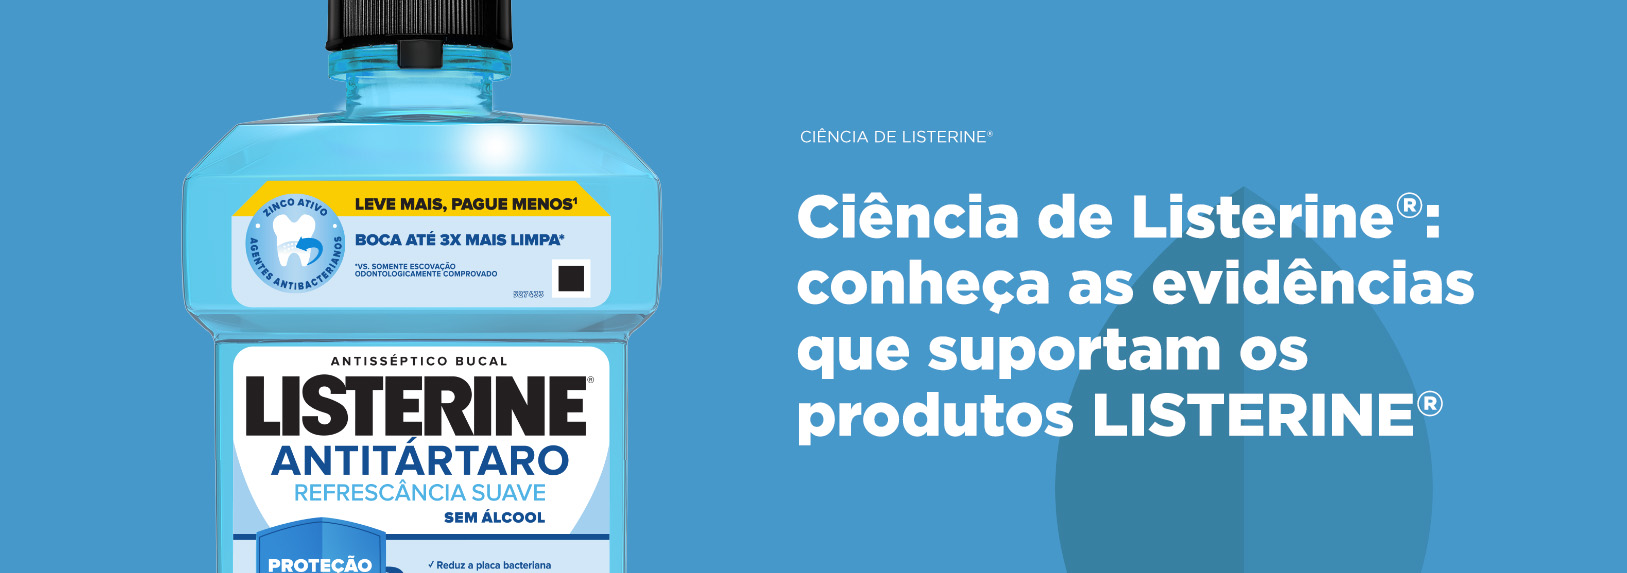 Banner Ciência de Listerine | Odontologia | J&J